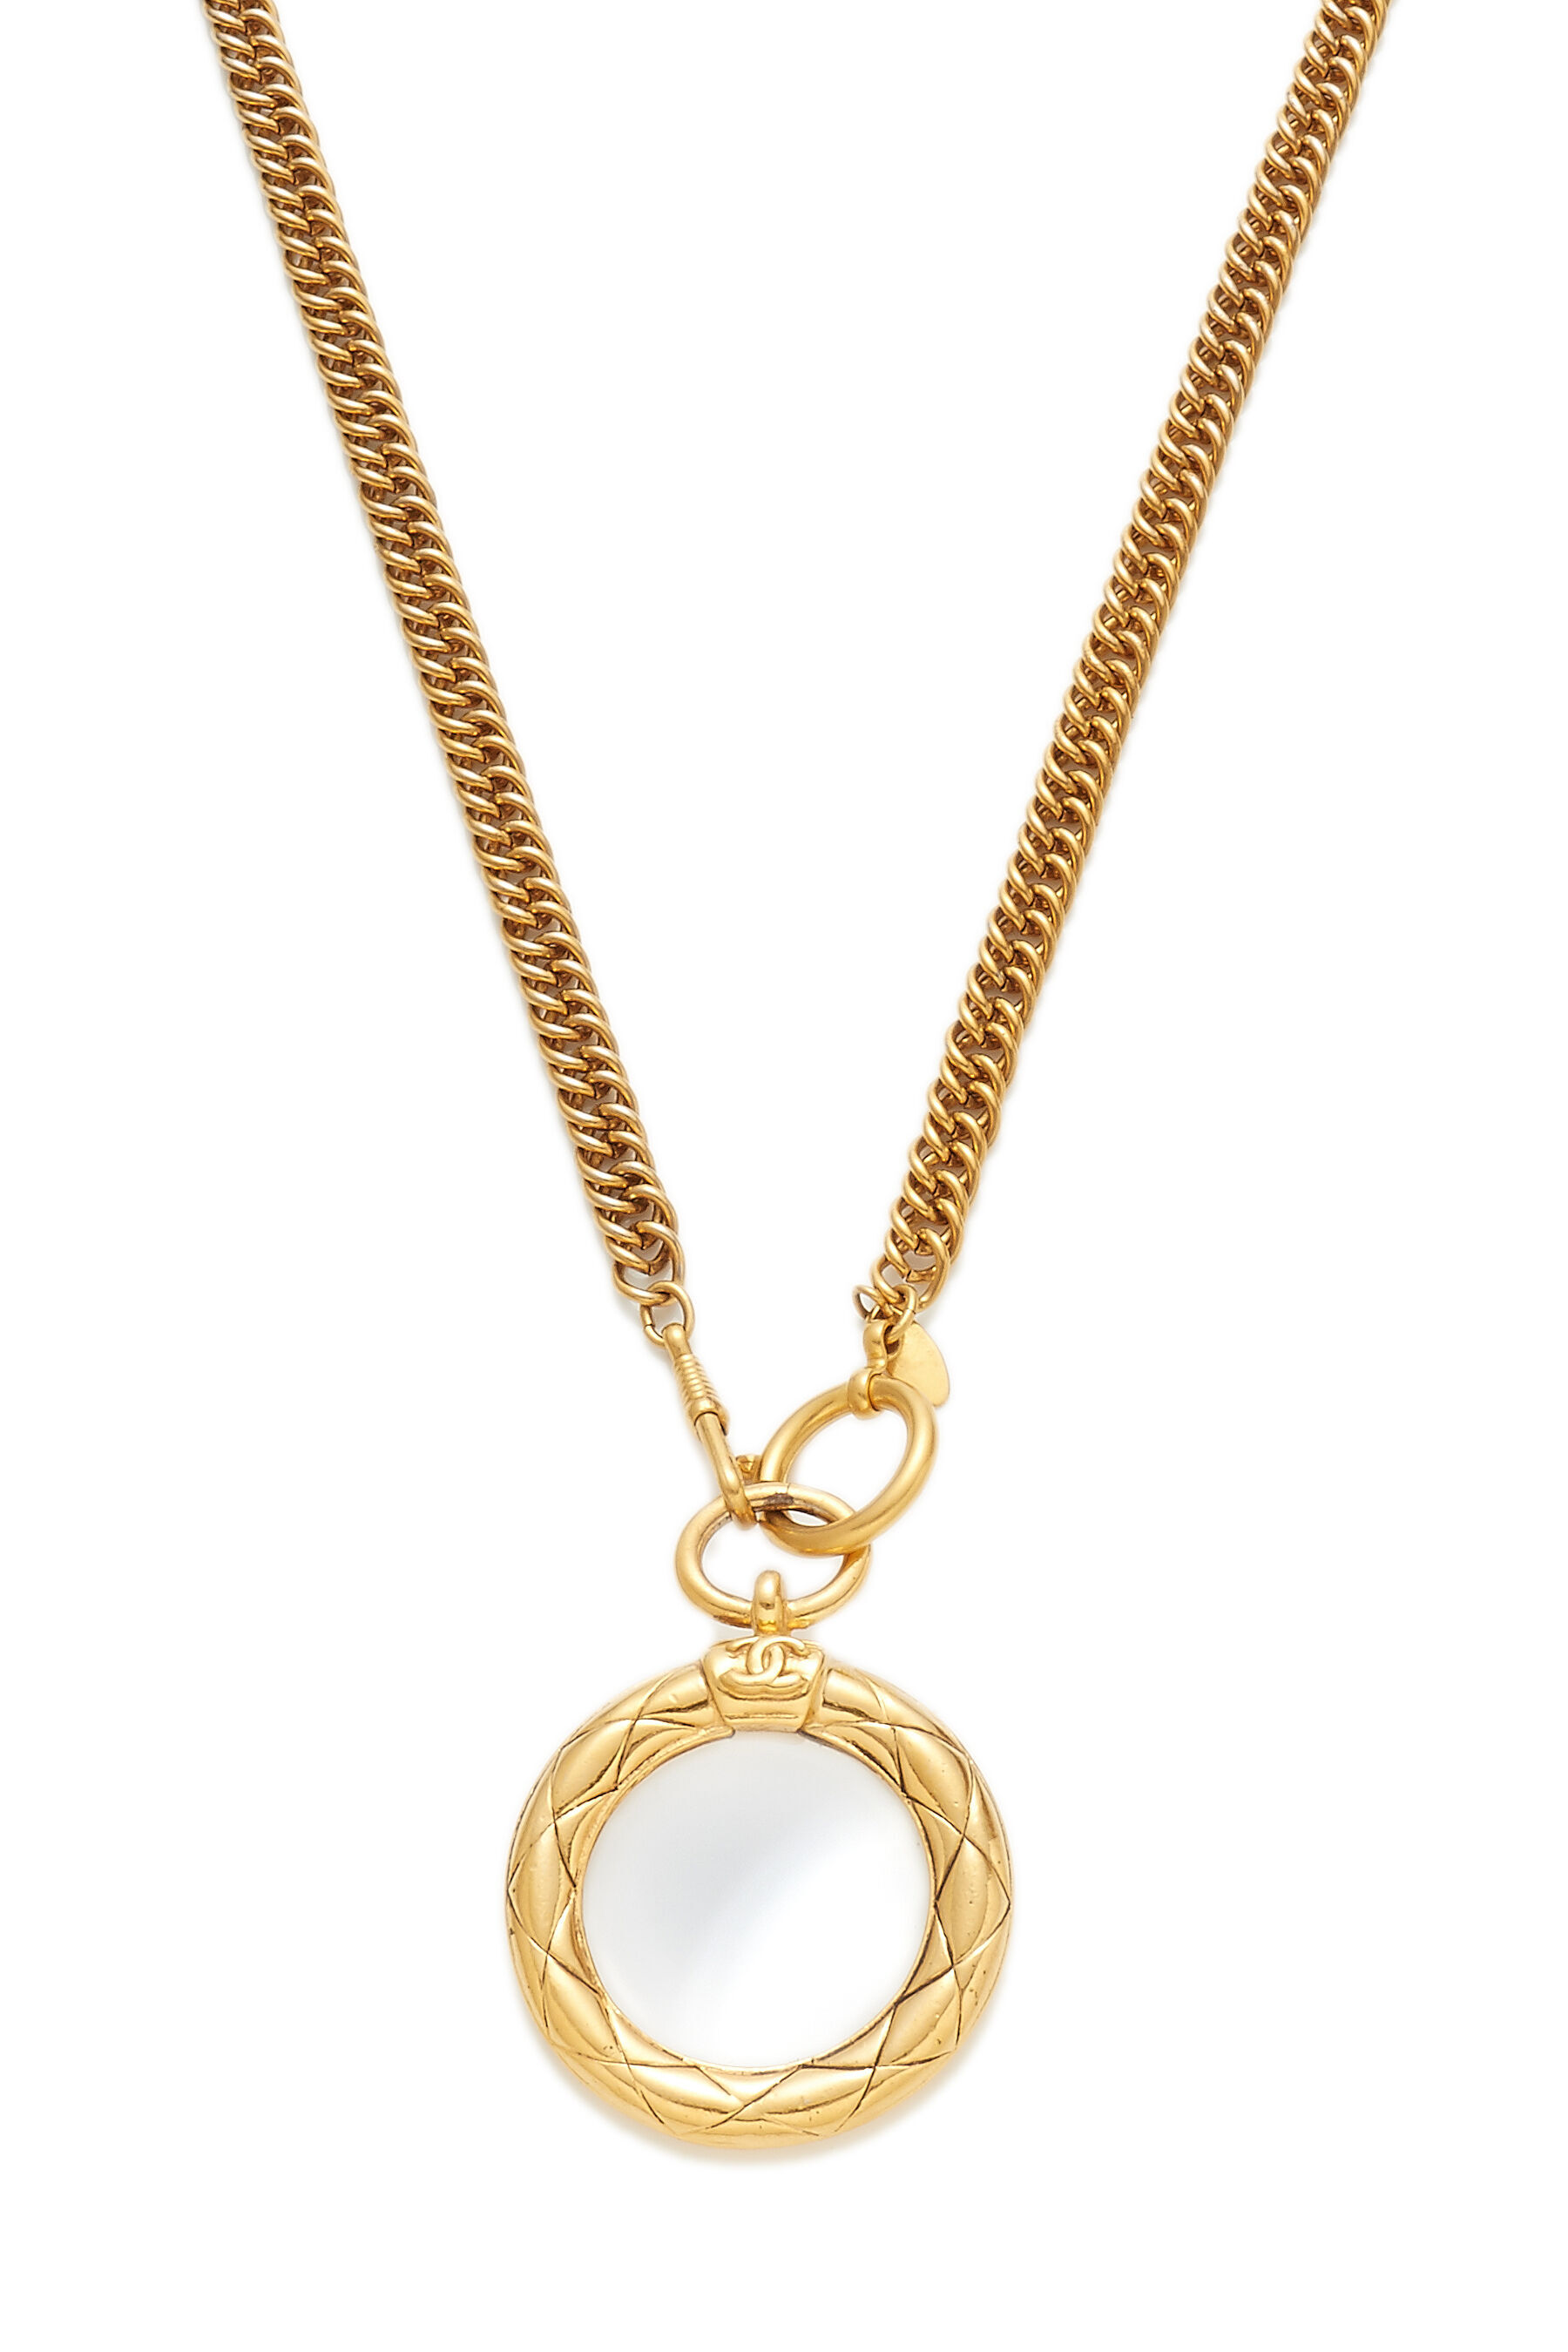 Chanel Necklace Multi Chain Silver CC Pendant SS 2018  Mightychic